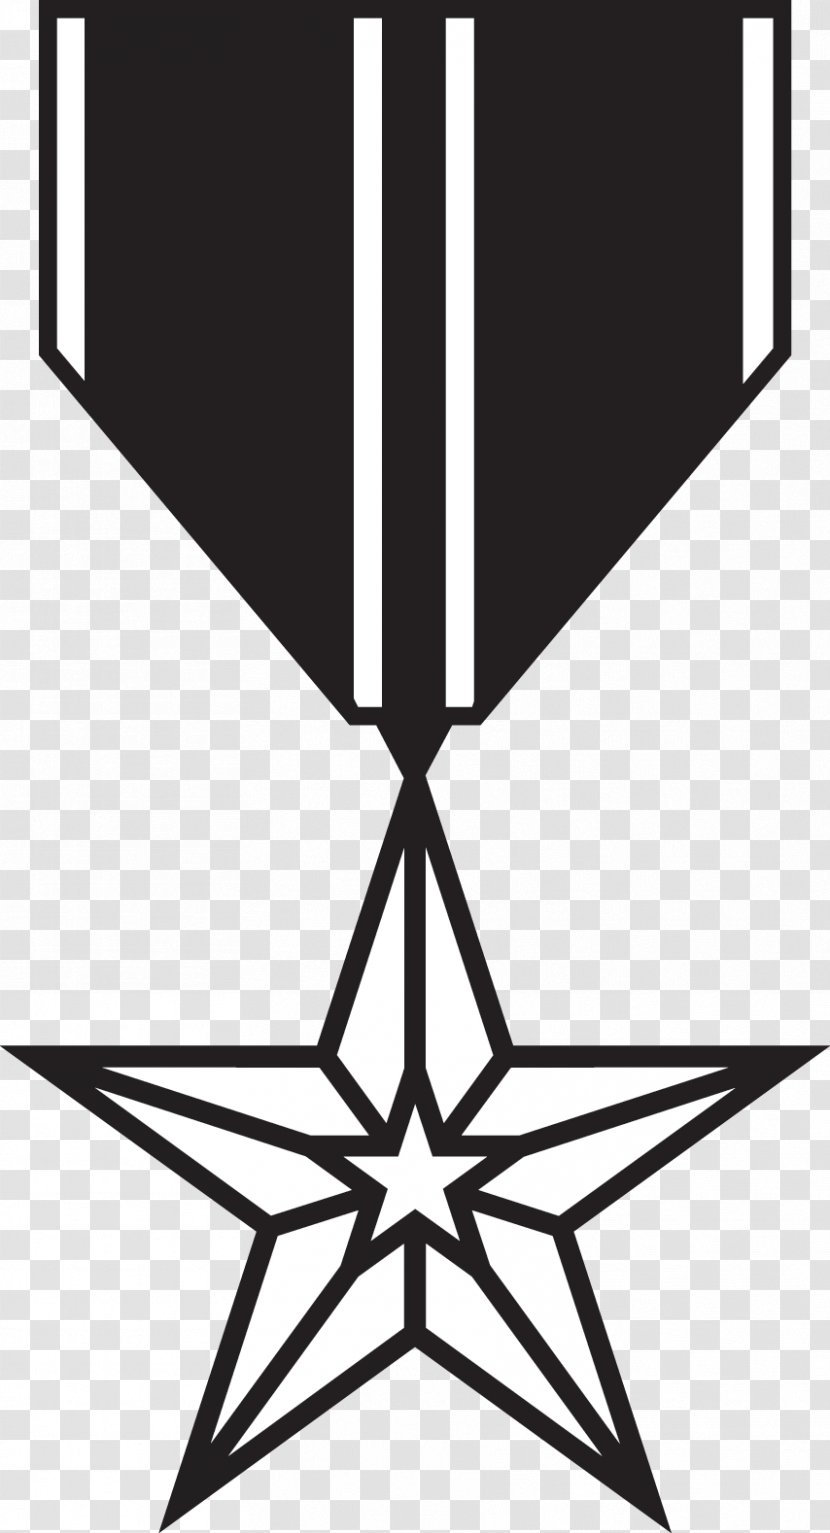 Vector Graphics Illustration Symmetry Clip Art Image - Royaltyfree - Militia Insignia Transparent PNG